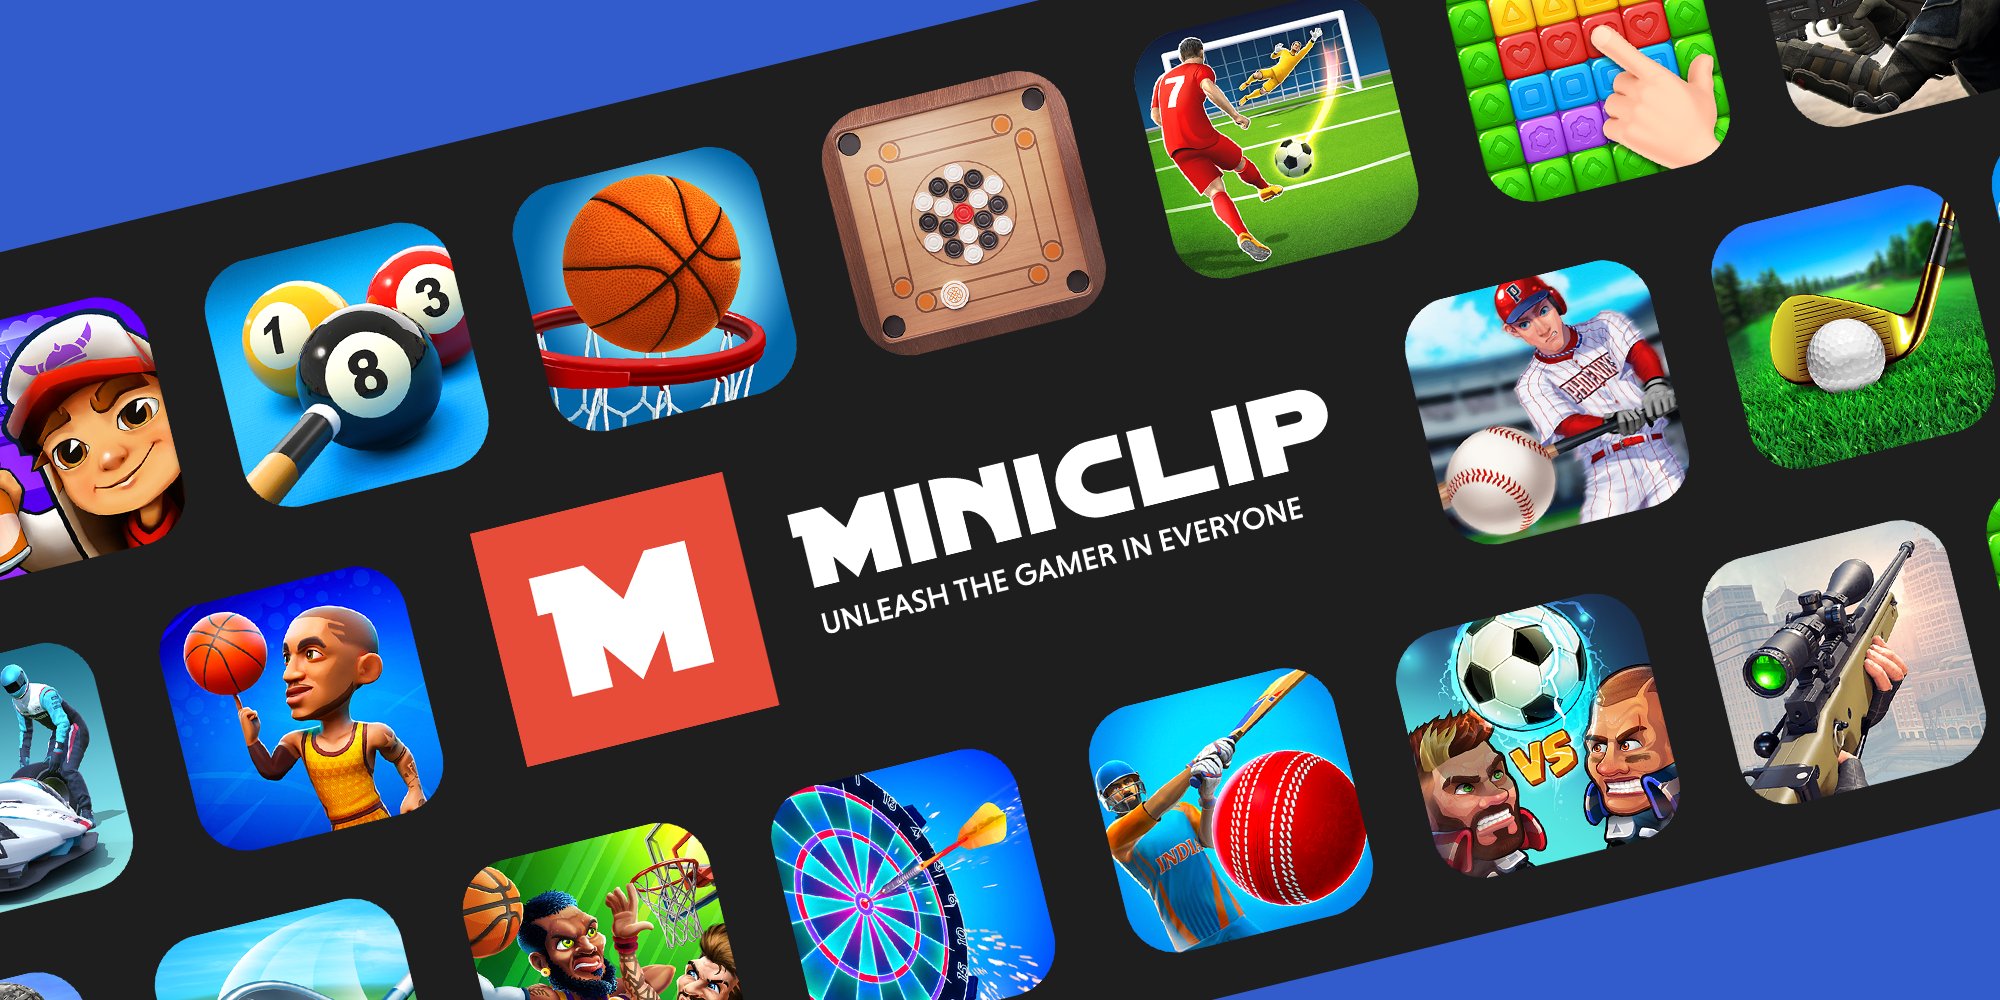 Web Games - Miniclip